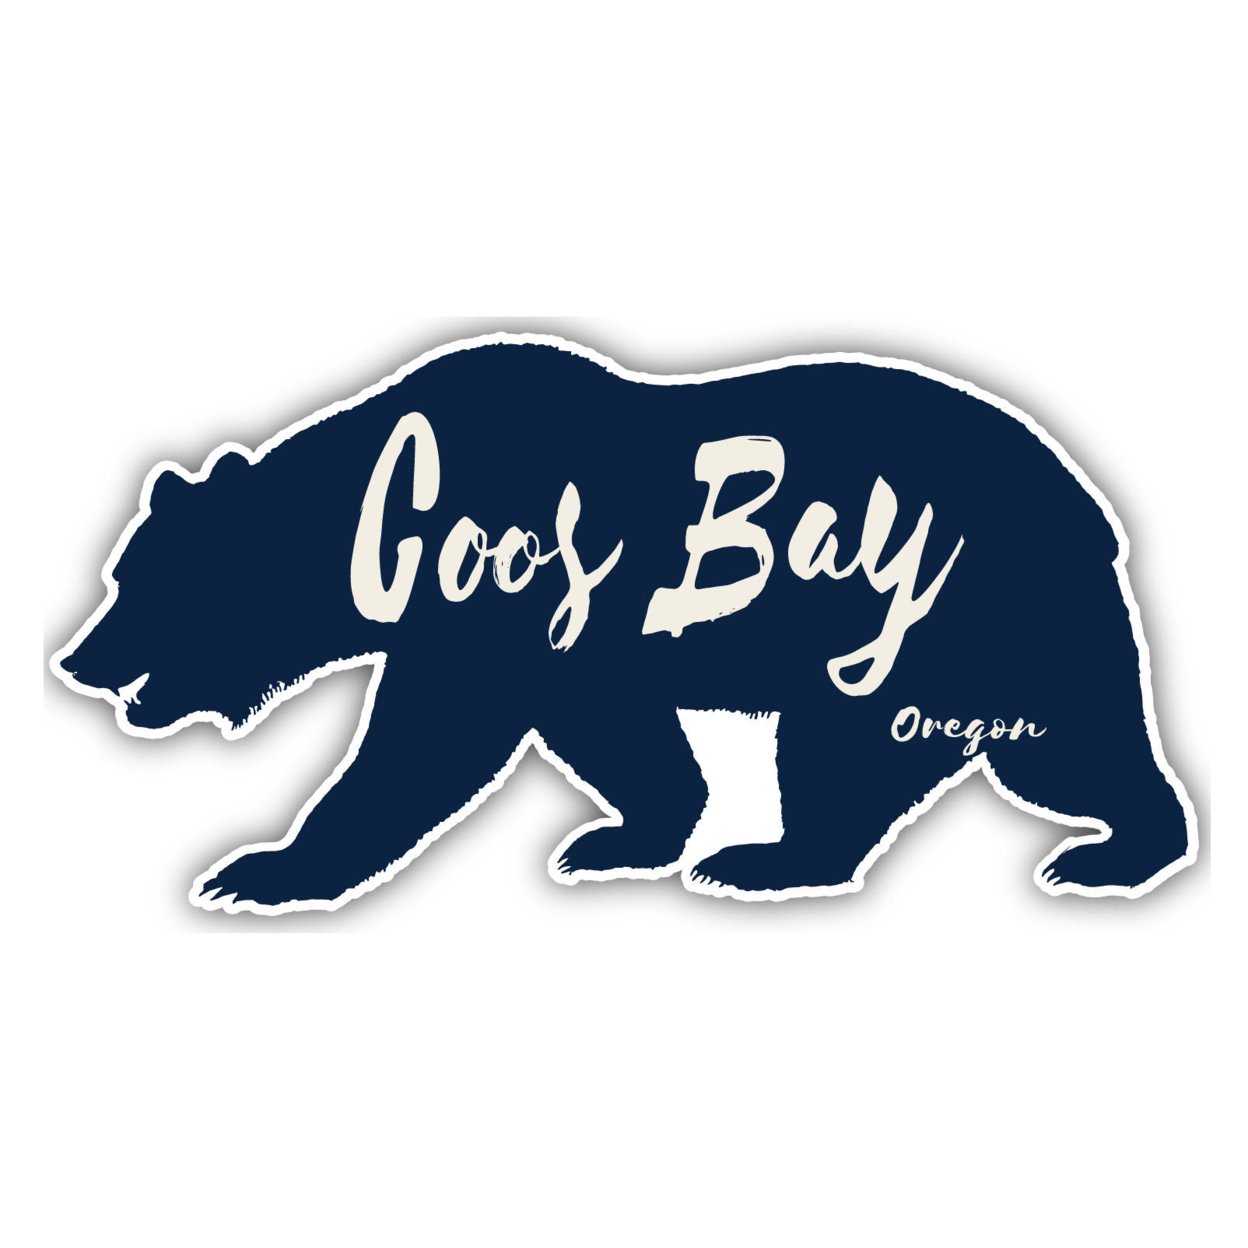 Coos Bay Oregon Souvenir Decorative Stickers (Choose Theme And Size) - Single Unit, 2-Inch, Adventures Awaits